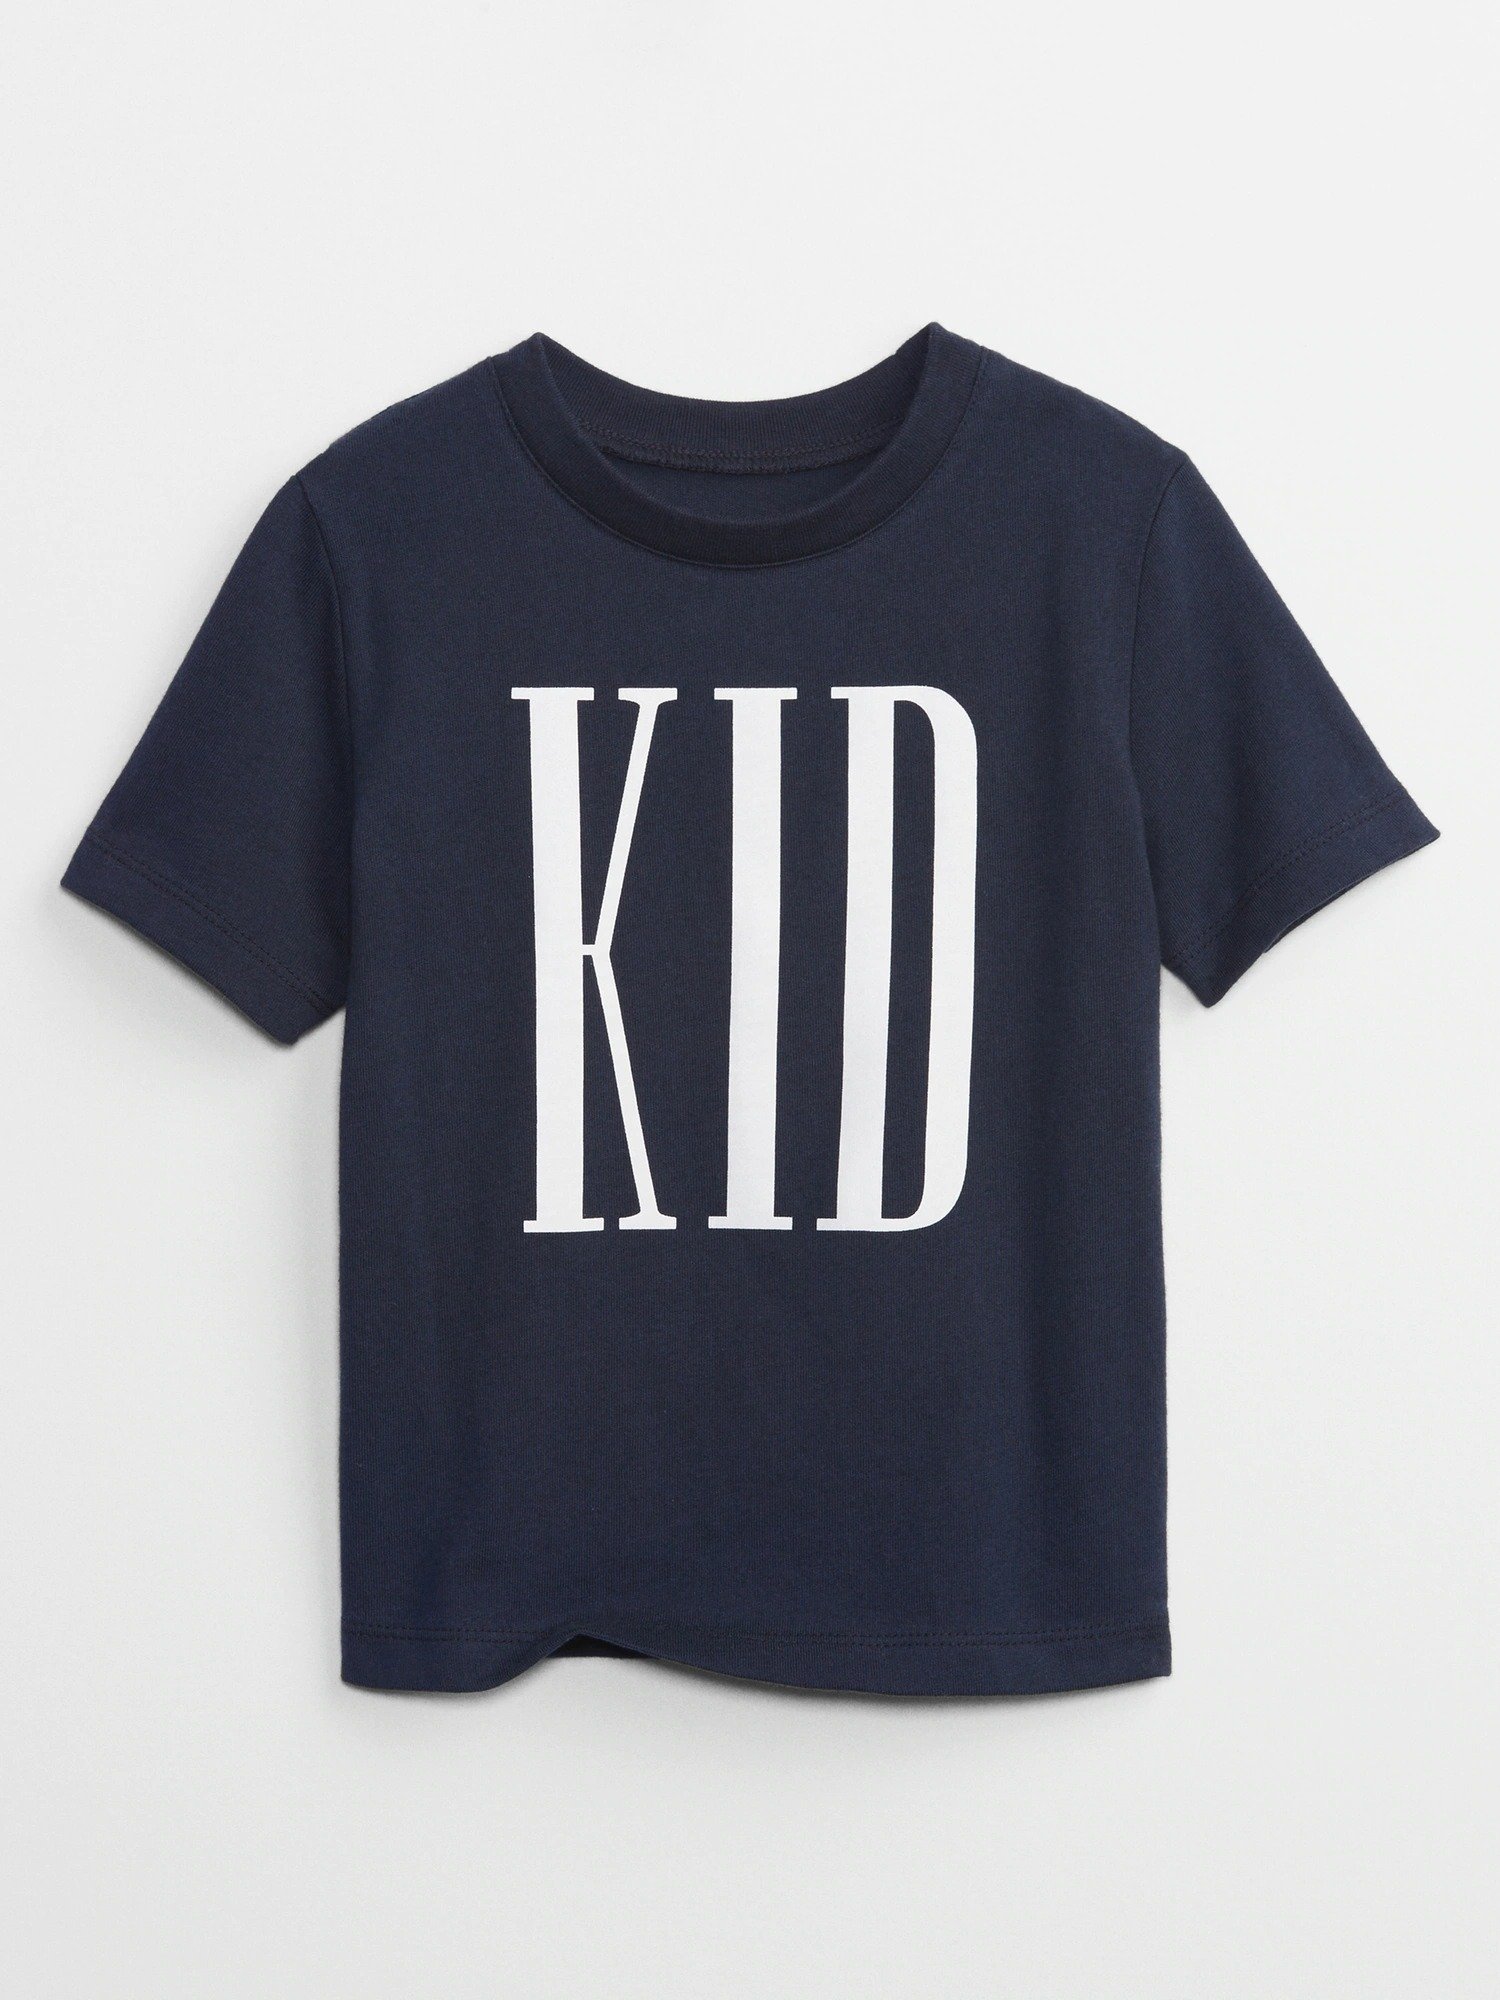 KID Grafik Baskılı T-Shirt product image